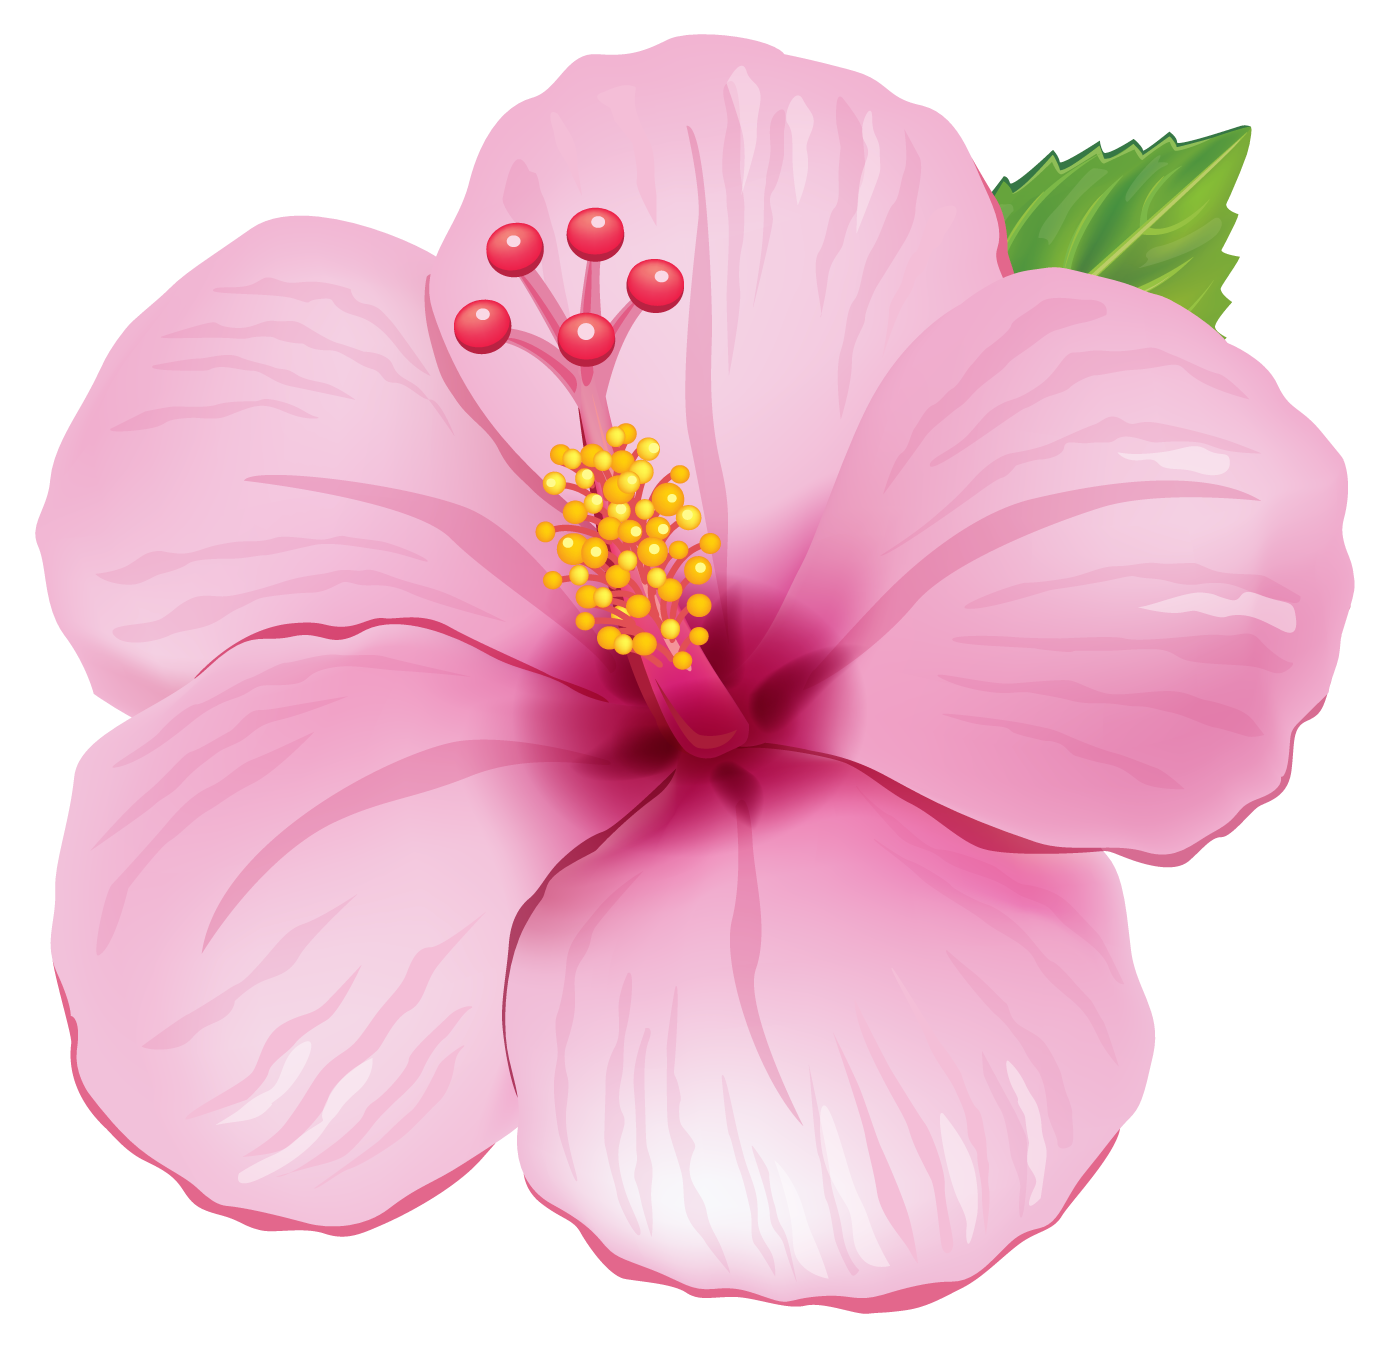 Цветочки картинки. Гавайский цветок гибискус. Цветы на прозрачном фоне. Цветочки на прозрачном фоне. Цветочки без фона.